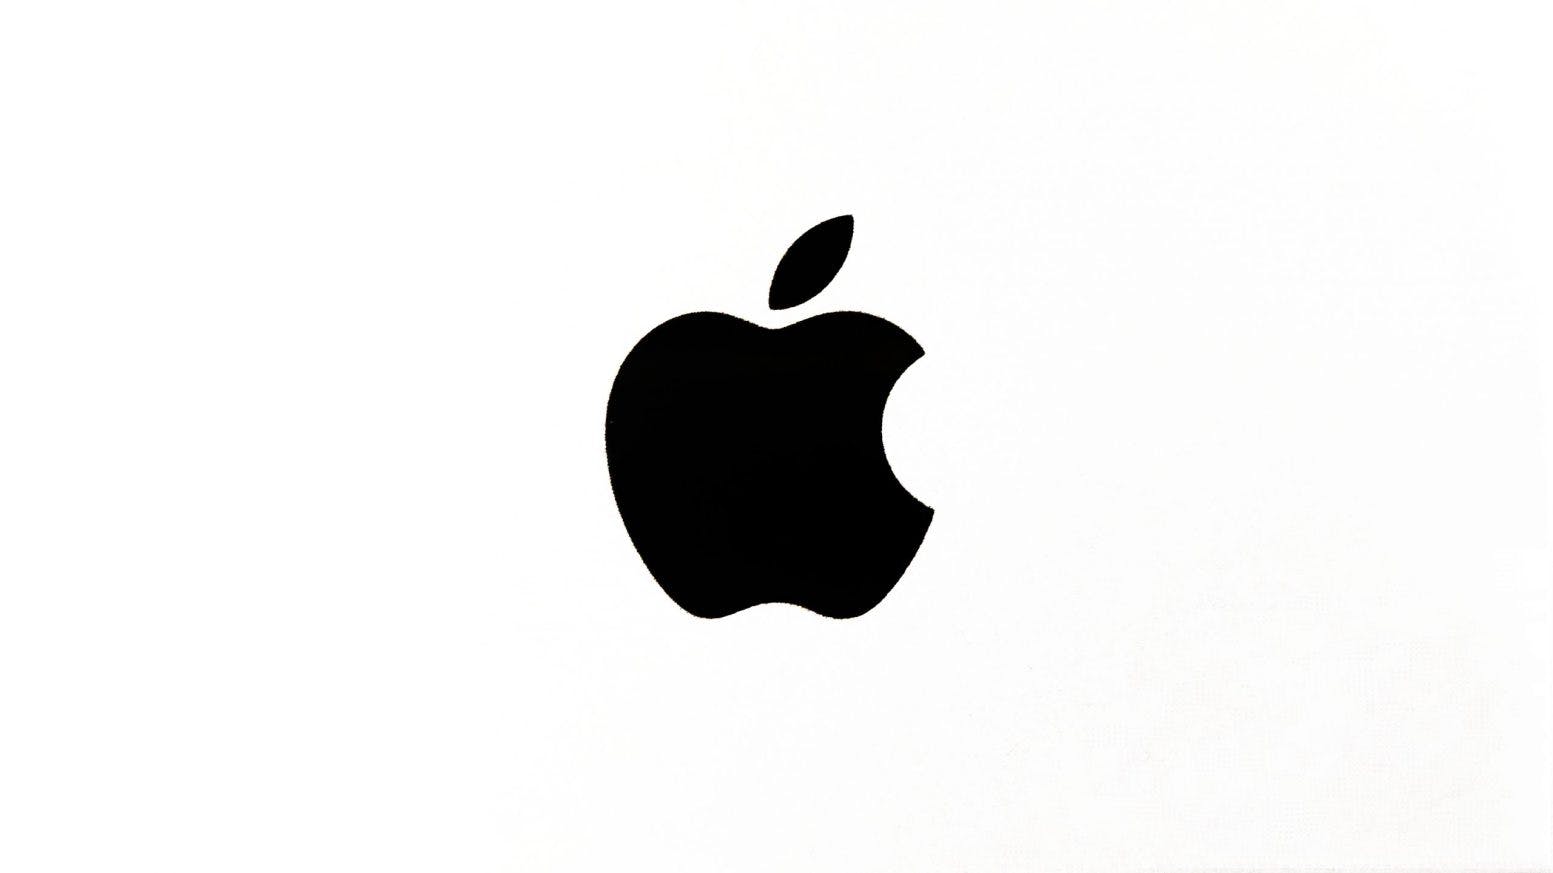 Image shows apple logo